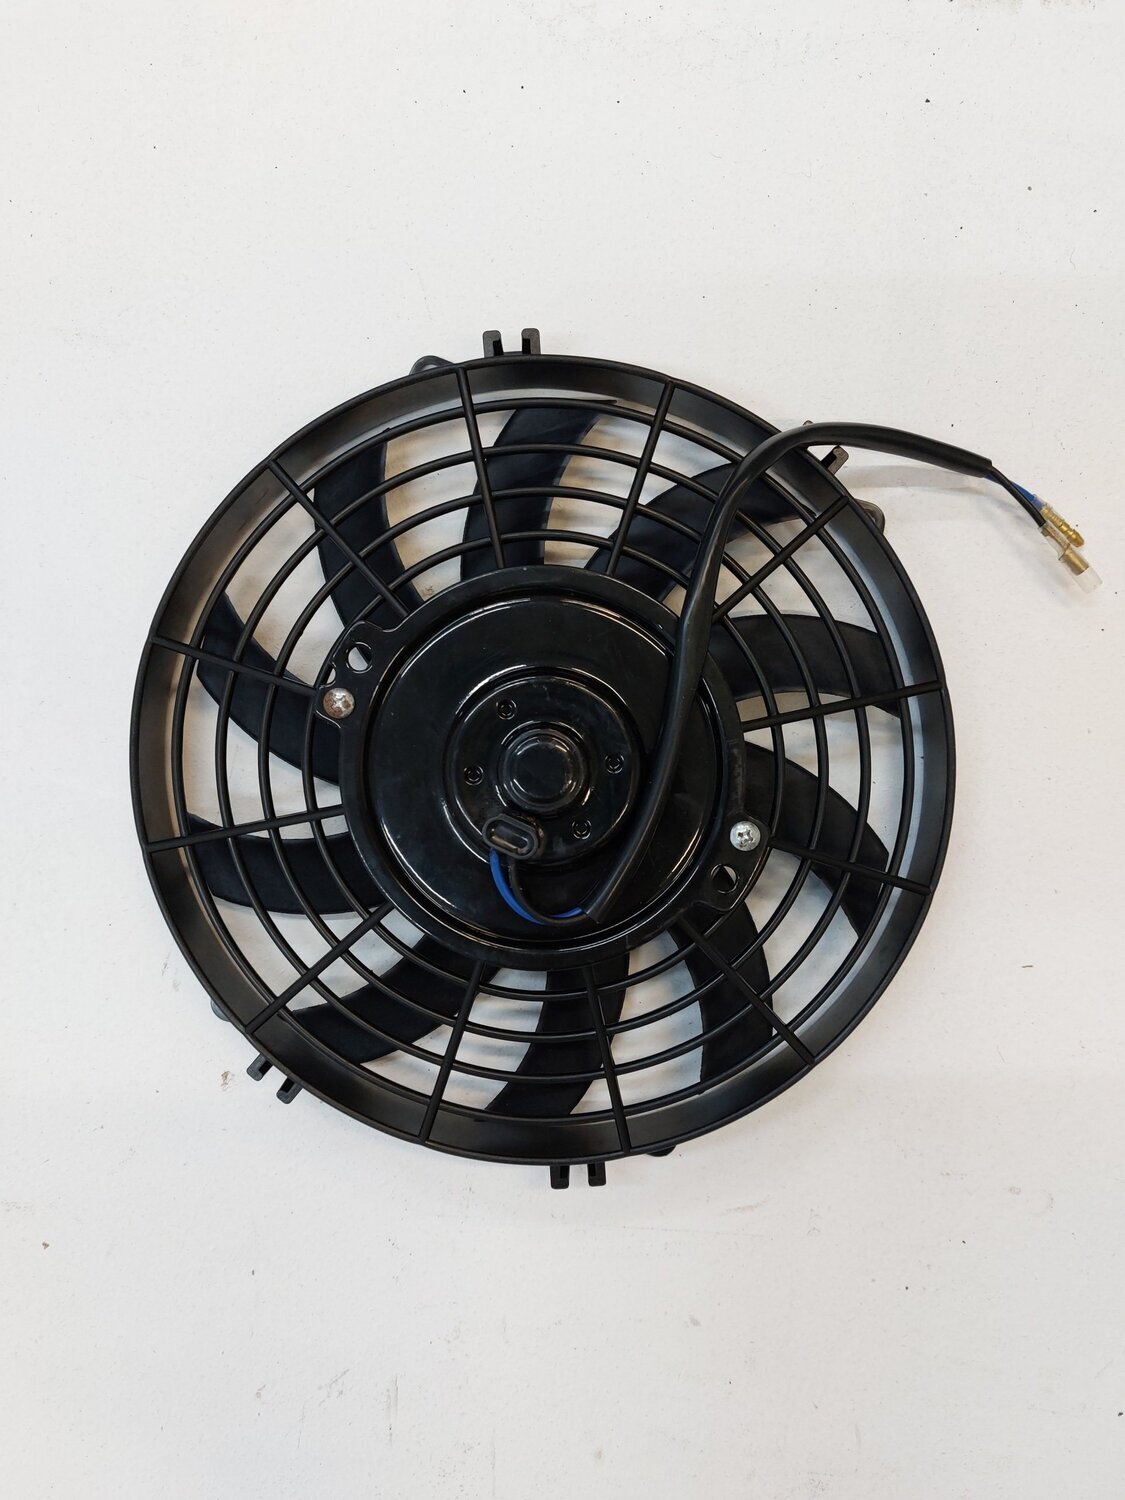 VX220 chargecooler replacement fans